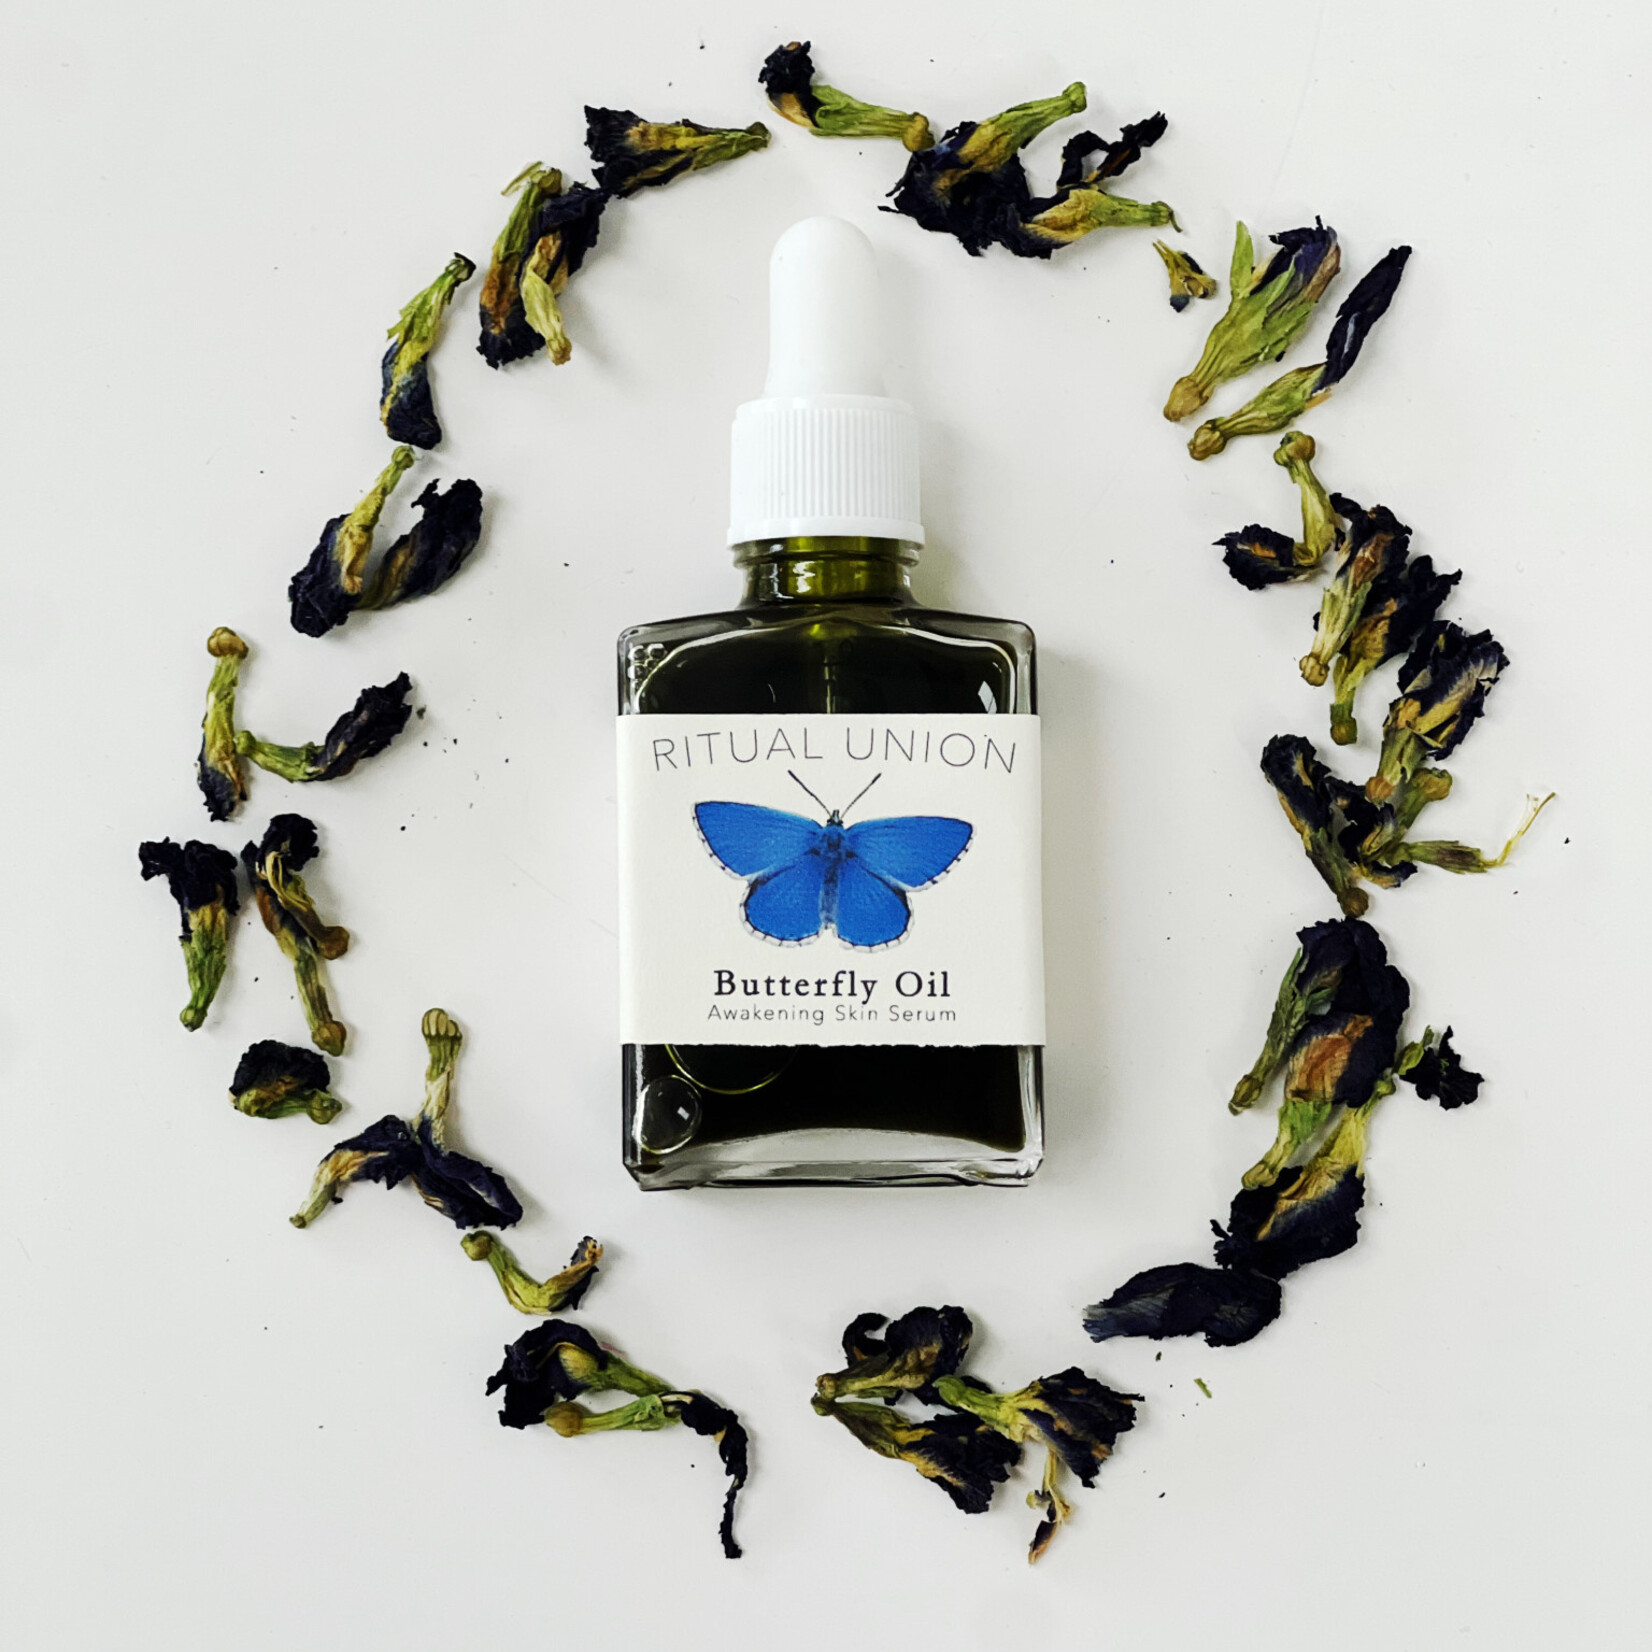 Ritual Union Butterfly Oil - Awakening Skin Serum by Ritual Union